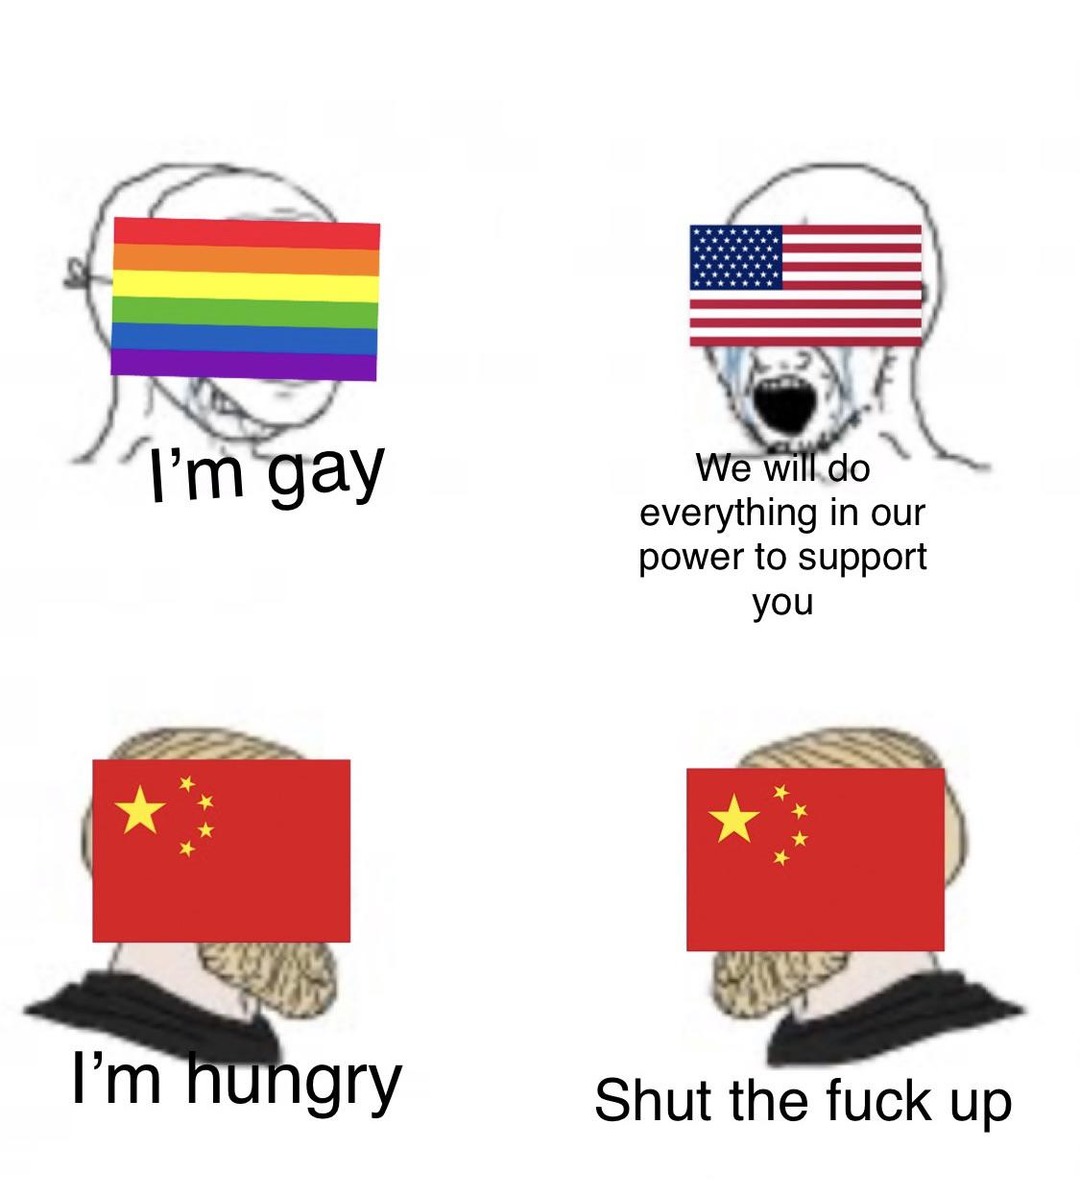 China - meme